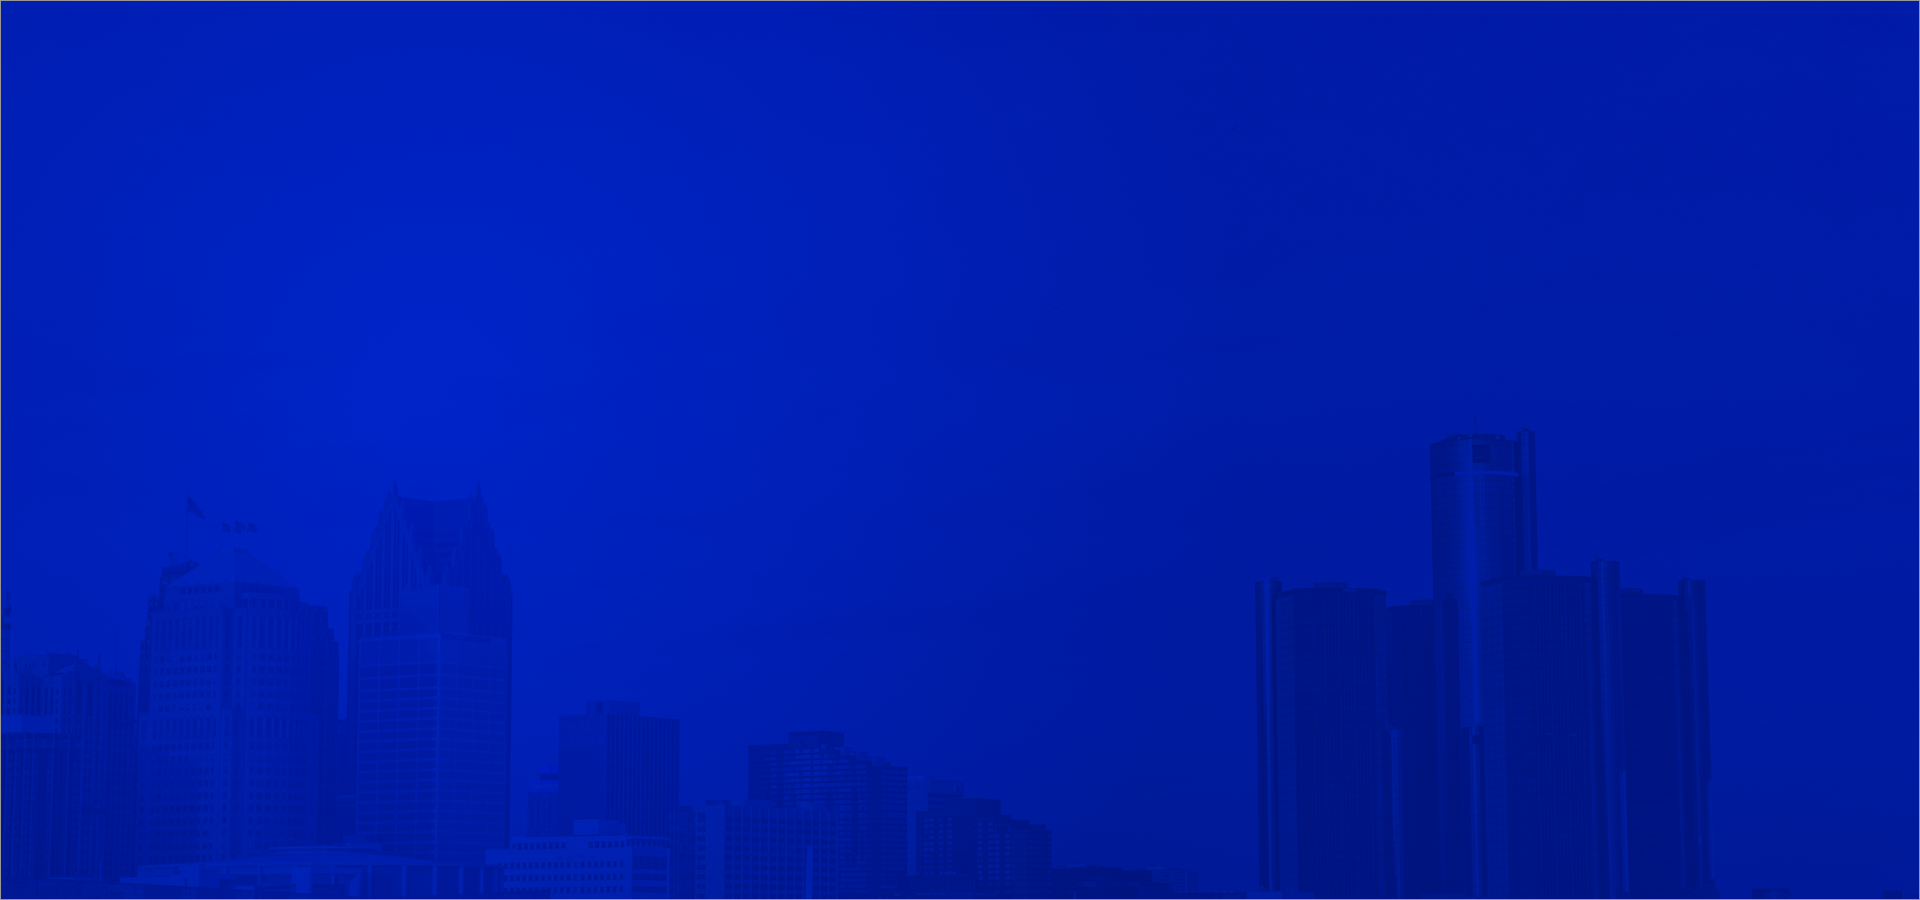 Blue styled background of Detroit